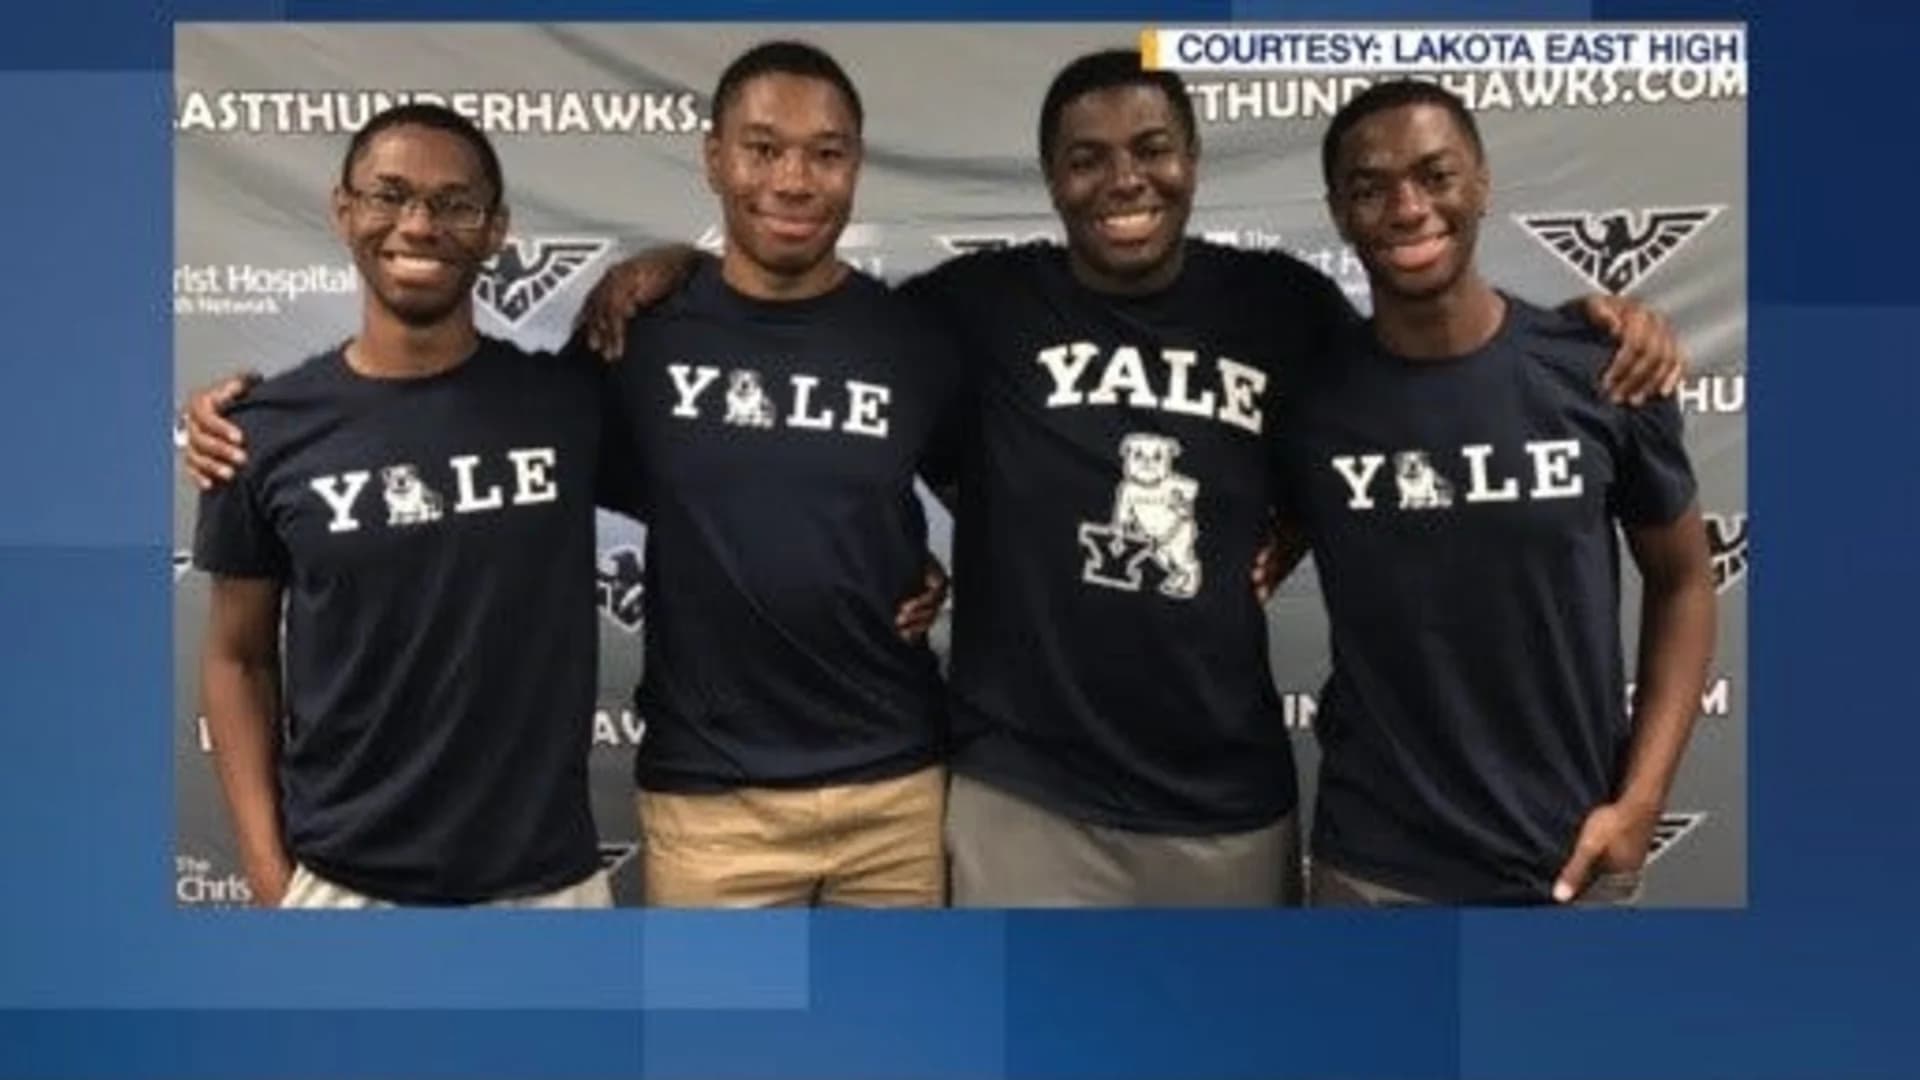 Ohio quadruplets all choose to attend Yale University